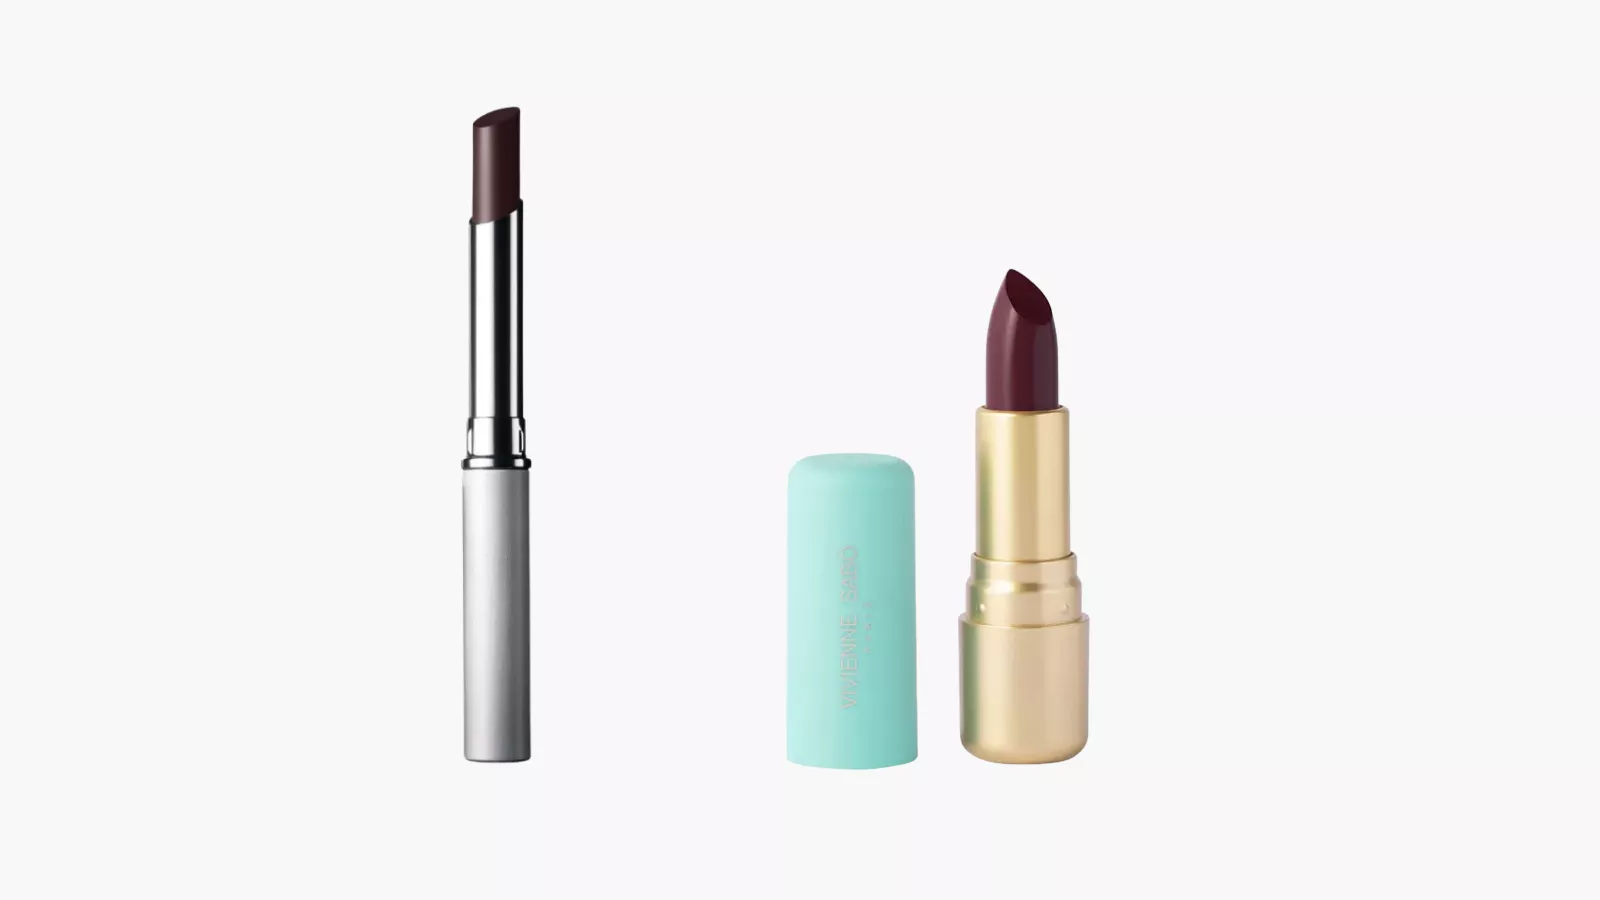 <p>Слева: помада Almost Lipstick, оттенок Black Honey, Clinique</p>

<p>Справа: помада Nude Createur, оттенок №20, Vivienne Sabo</p>